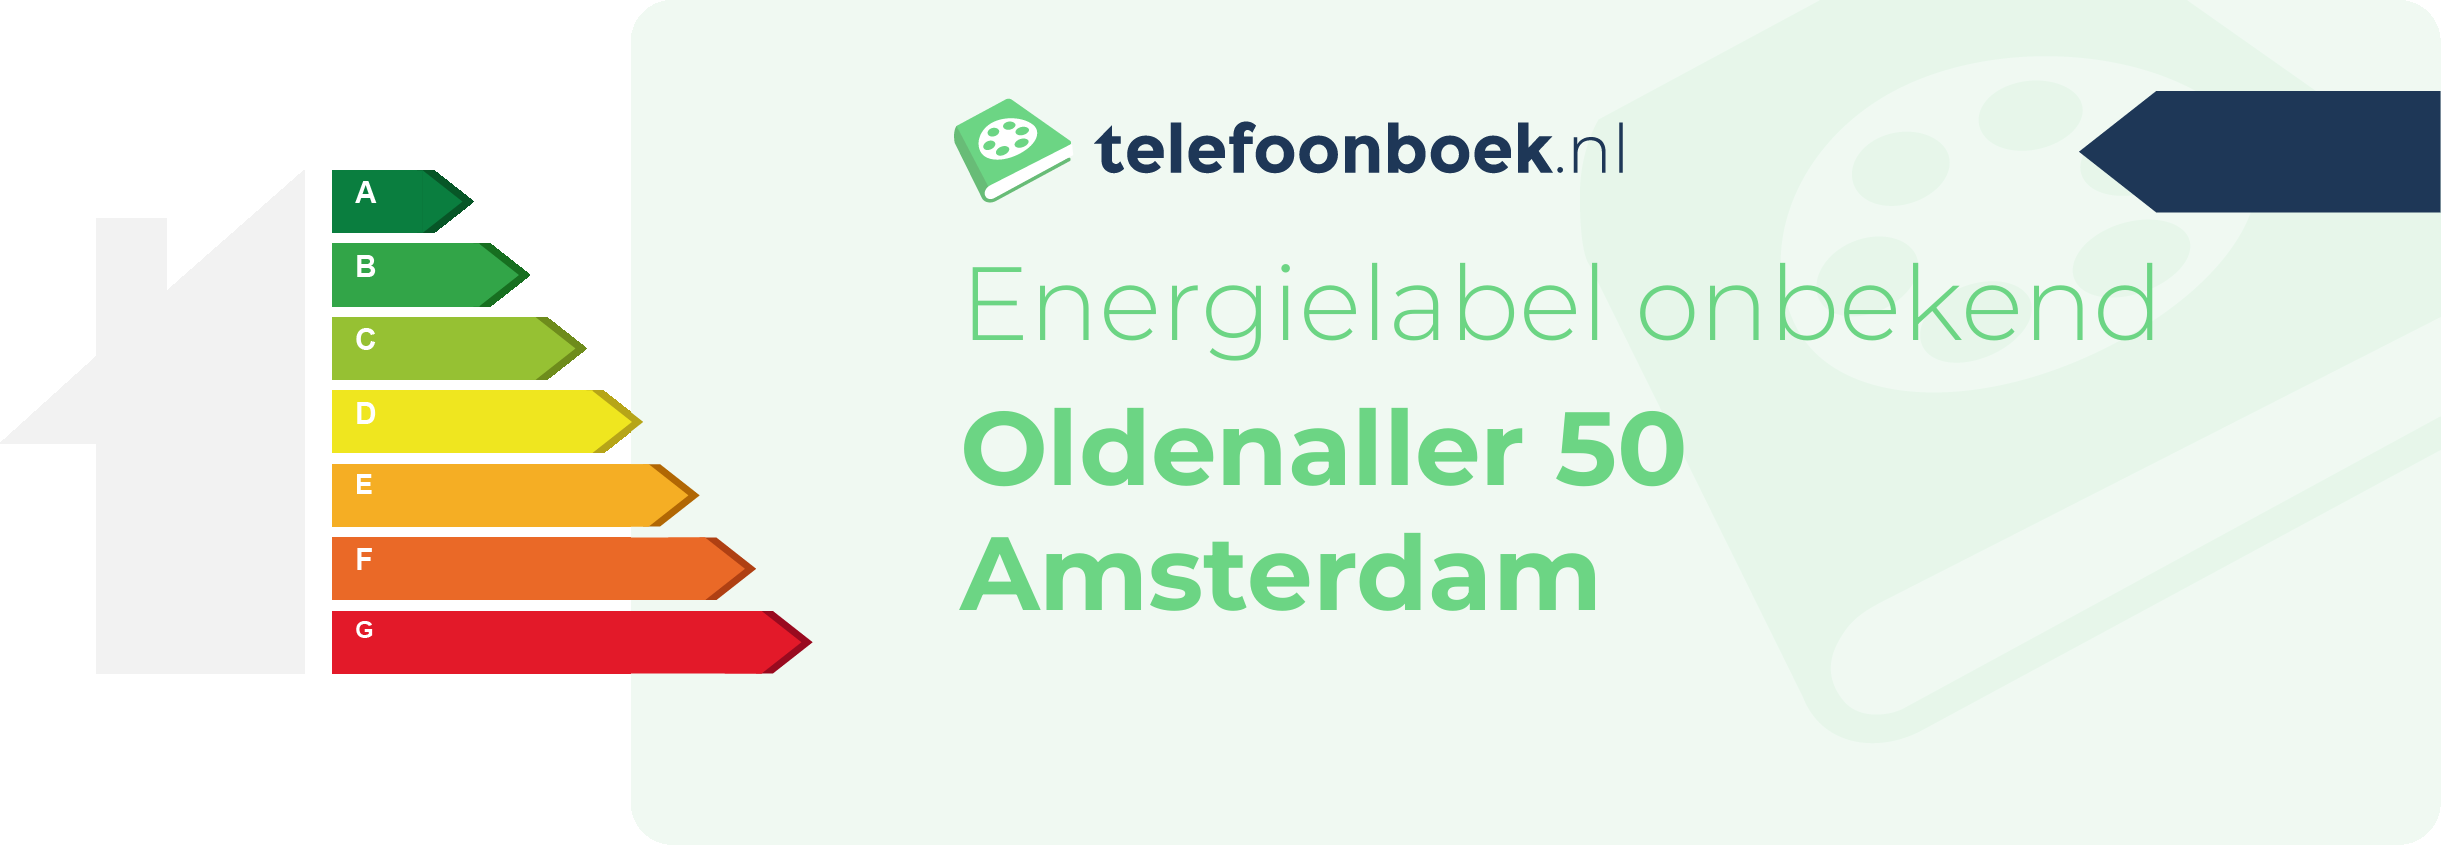 Energielabel Oldenaller 50 Amsterdam